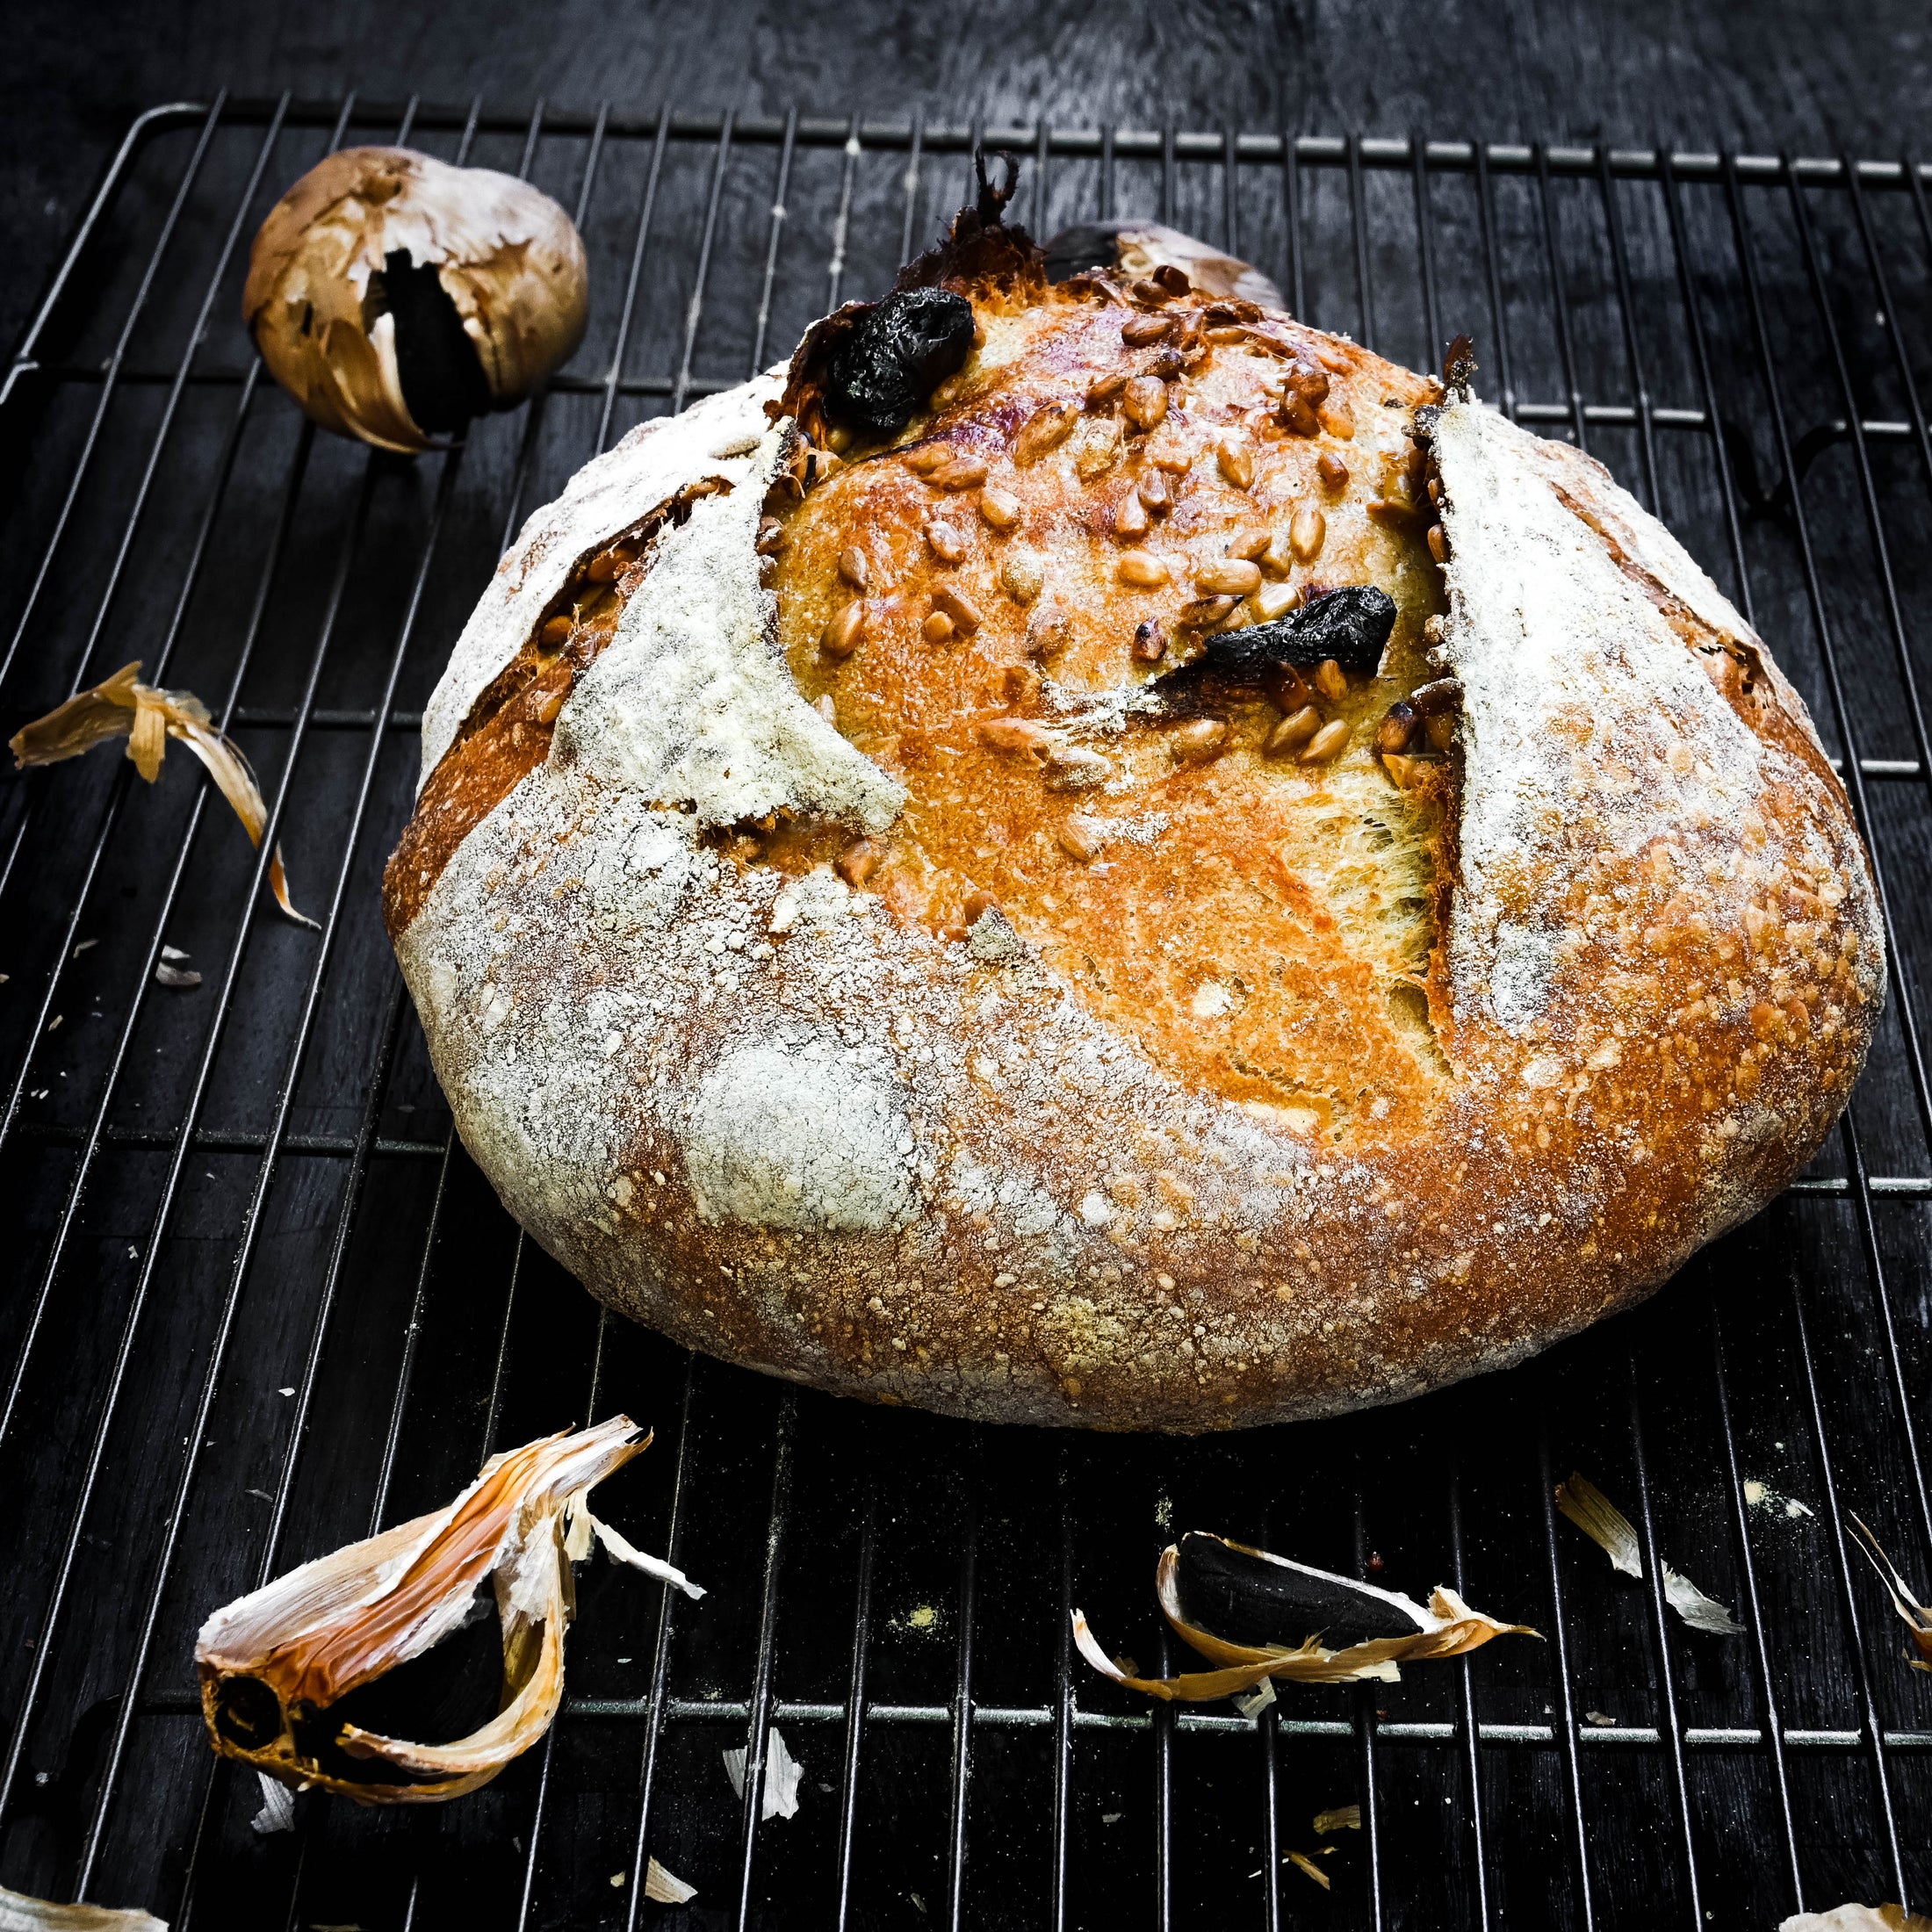 Homemade Bread with Black Garlic